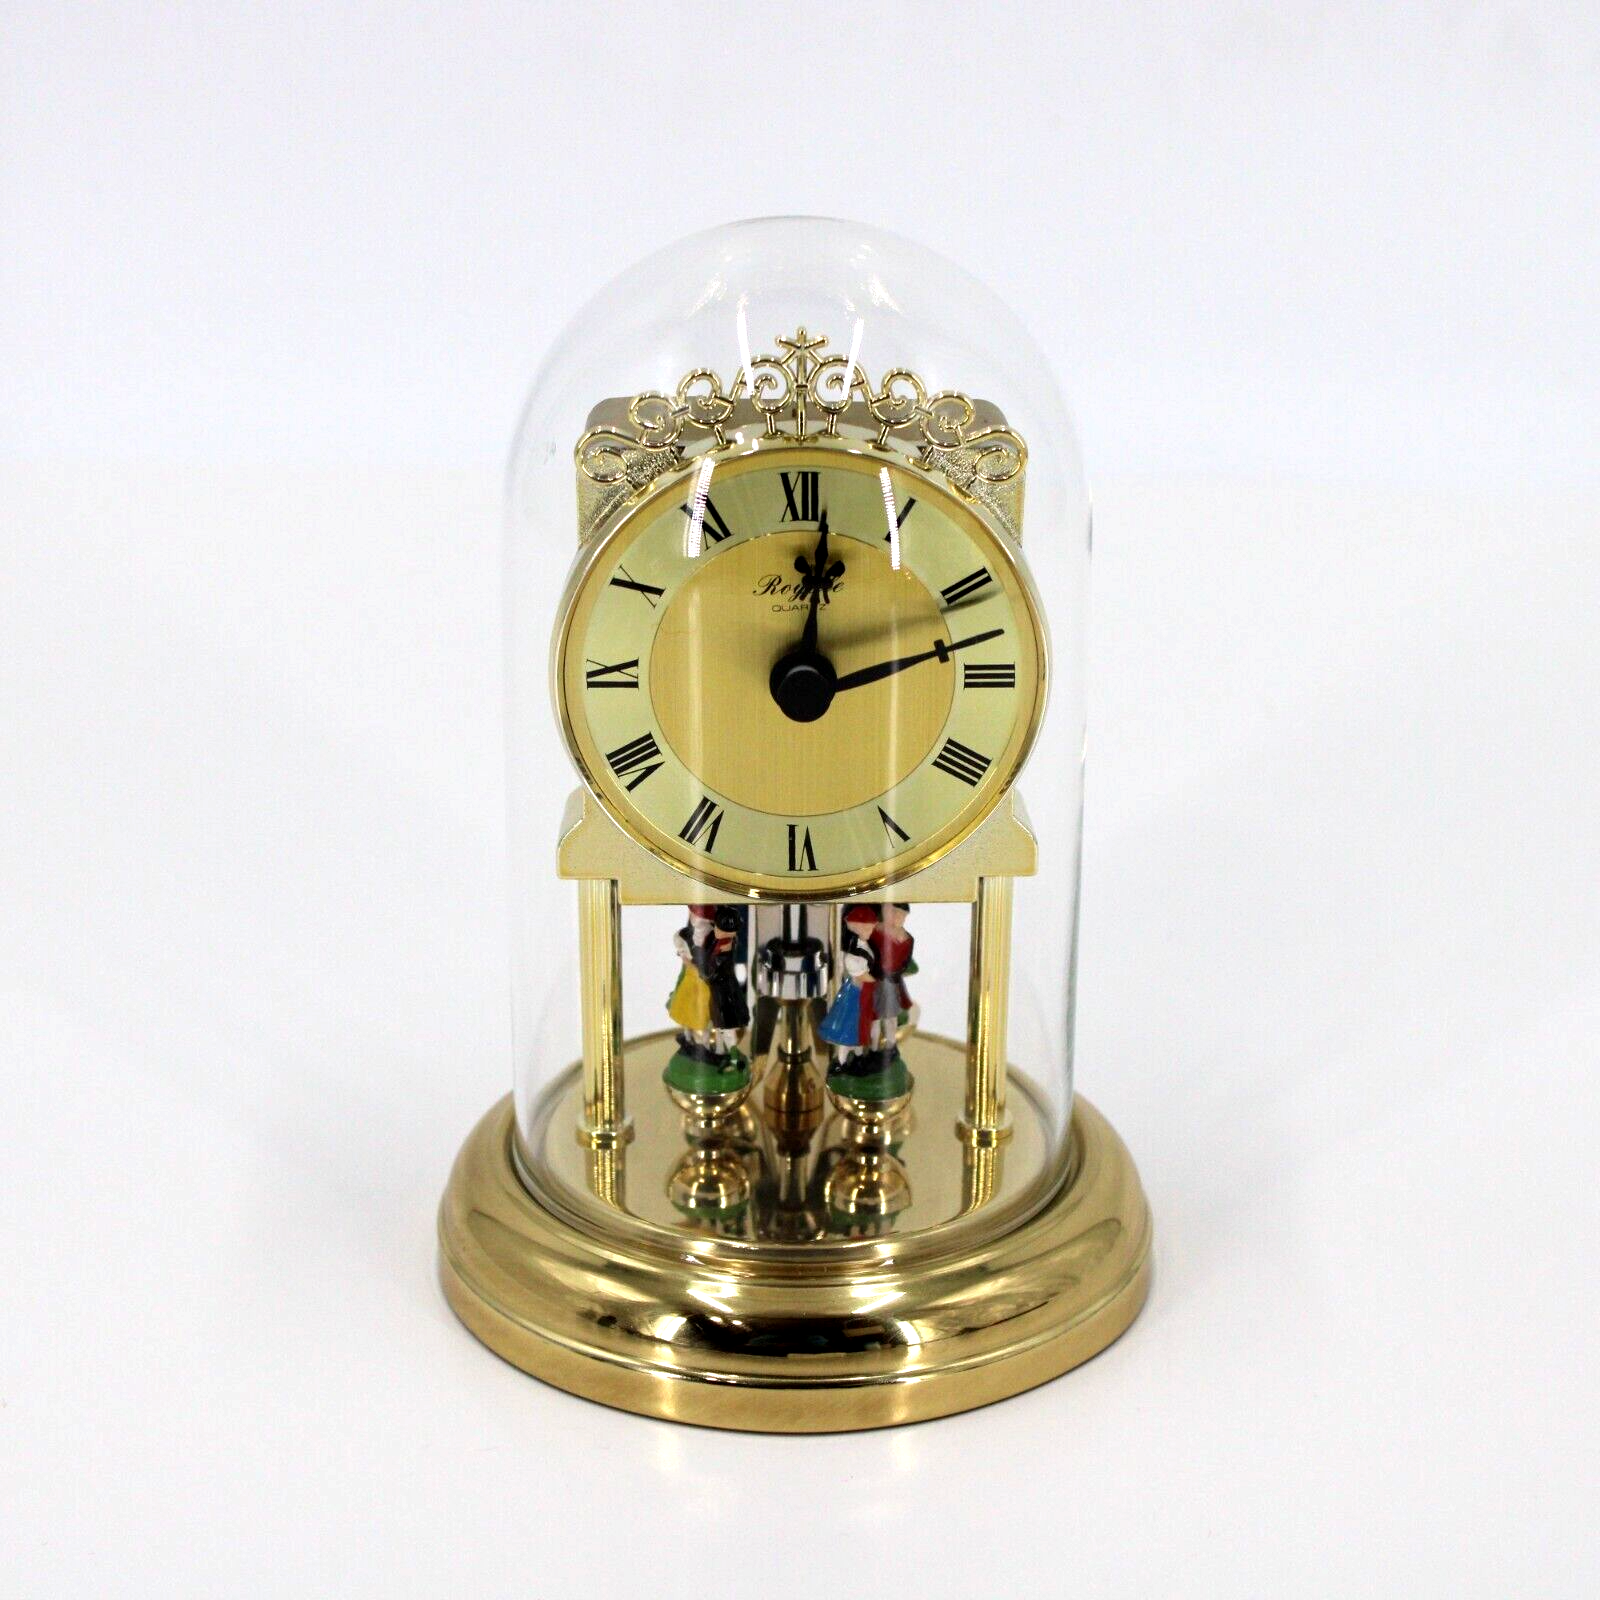 Vergissing geweer Jood Royale Quartz Glass Dome Anniversary Clock with Dancing Figures W085700675  | eBay